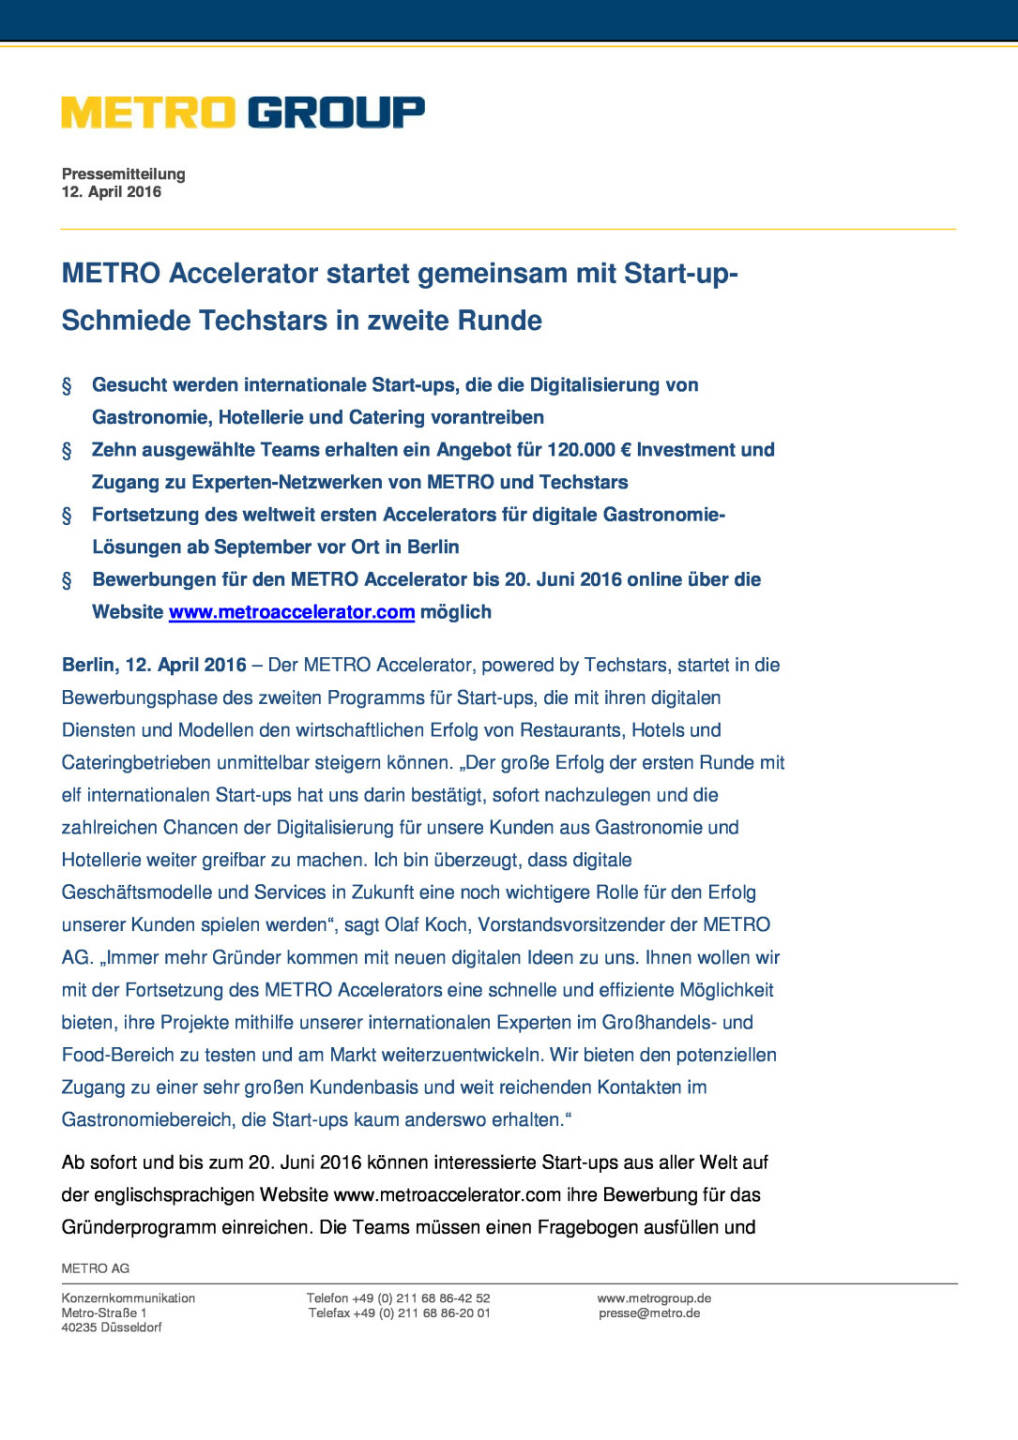 Metro Group: Metro Accelerator startet gemeinsam mit Start-up- Schmiede Techstars in zweite Runde, Seite 1/3, komplettes Dokument unter http://boerse-social.com/static/uploads/file_870_metro_group_metro_accelerator_startet_gemeinsam_mit_start-up-_schmiede_techstars_in_zweite_runde.pdf